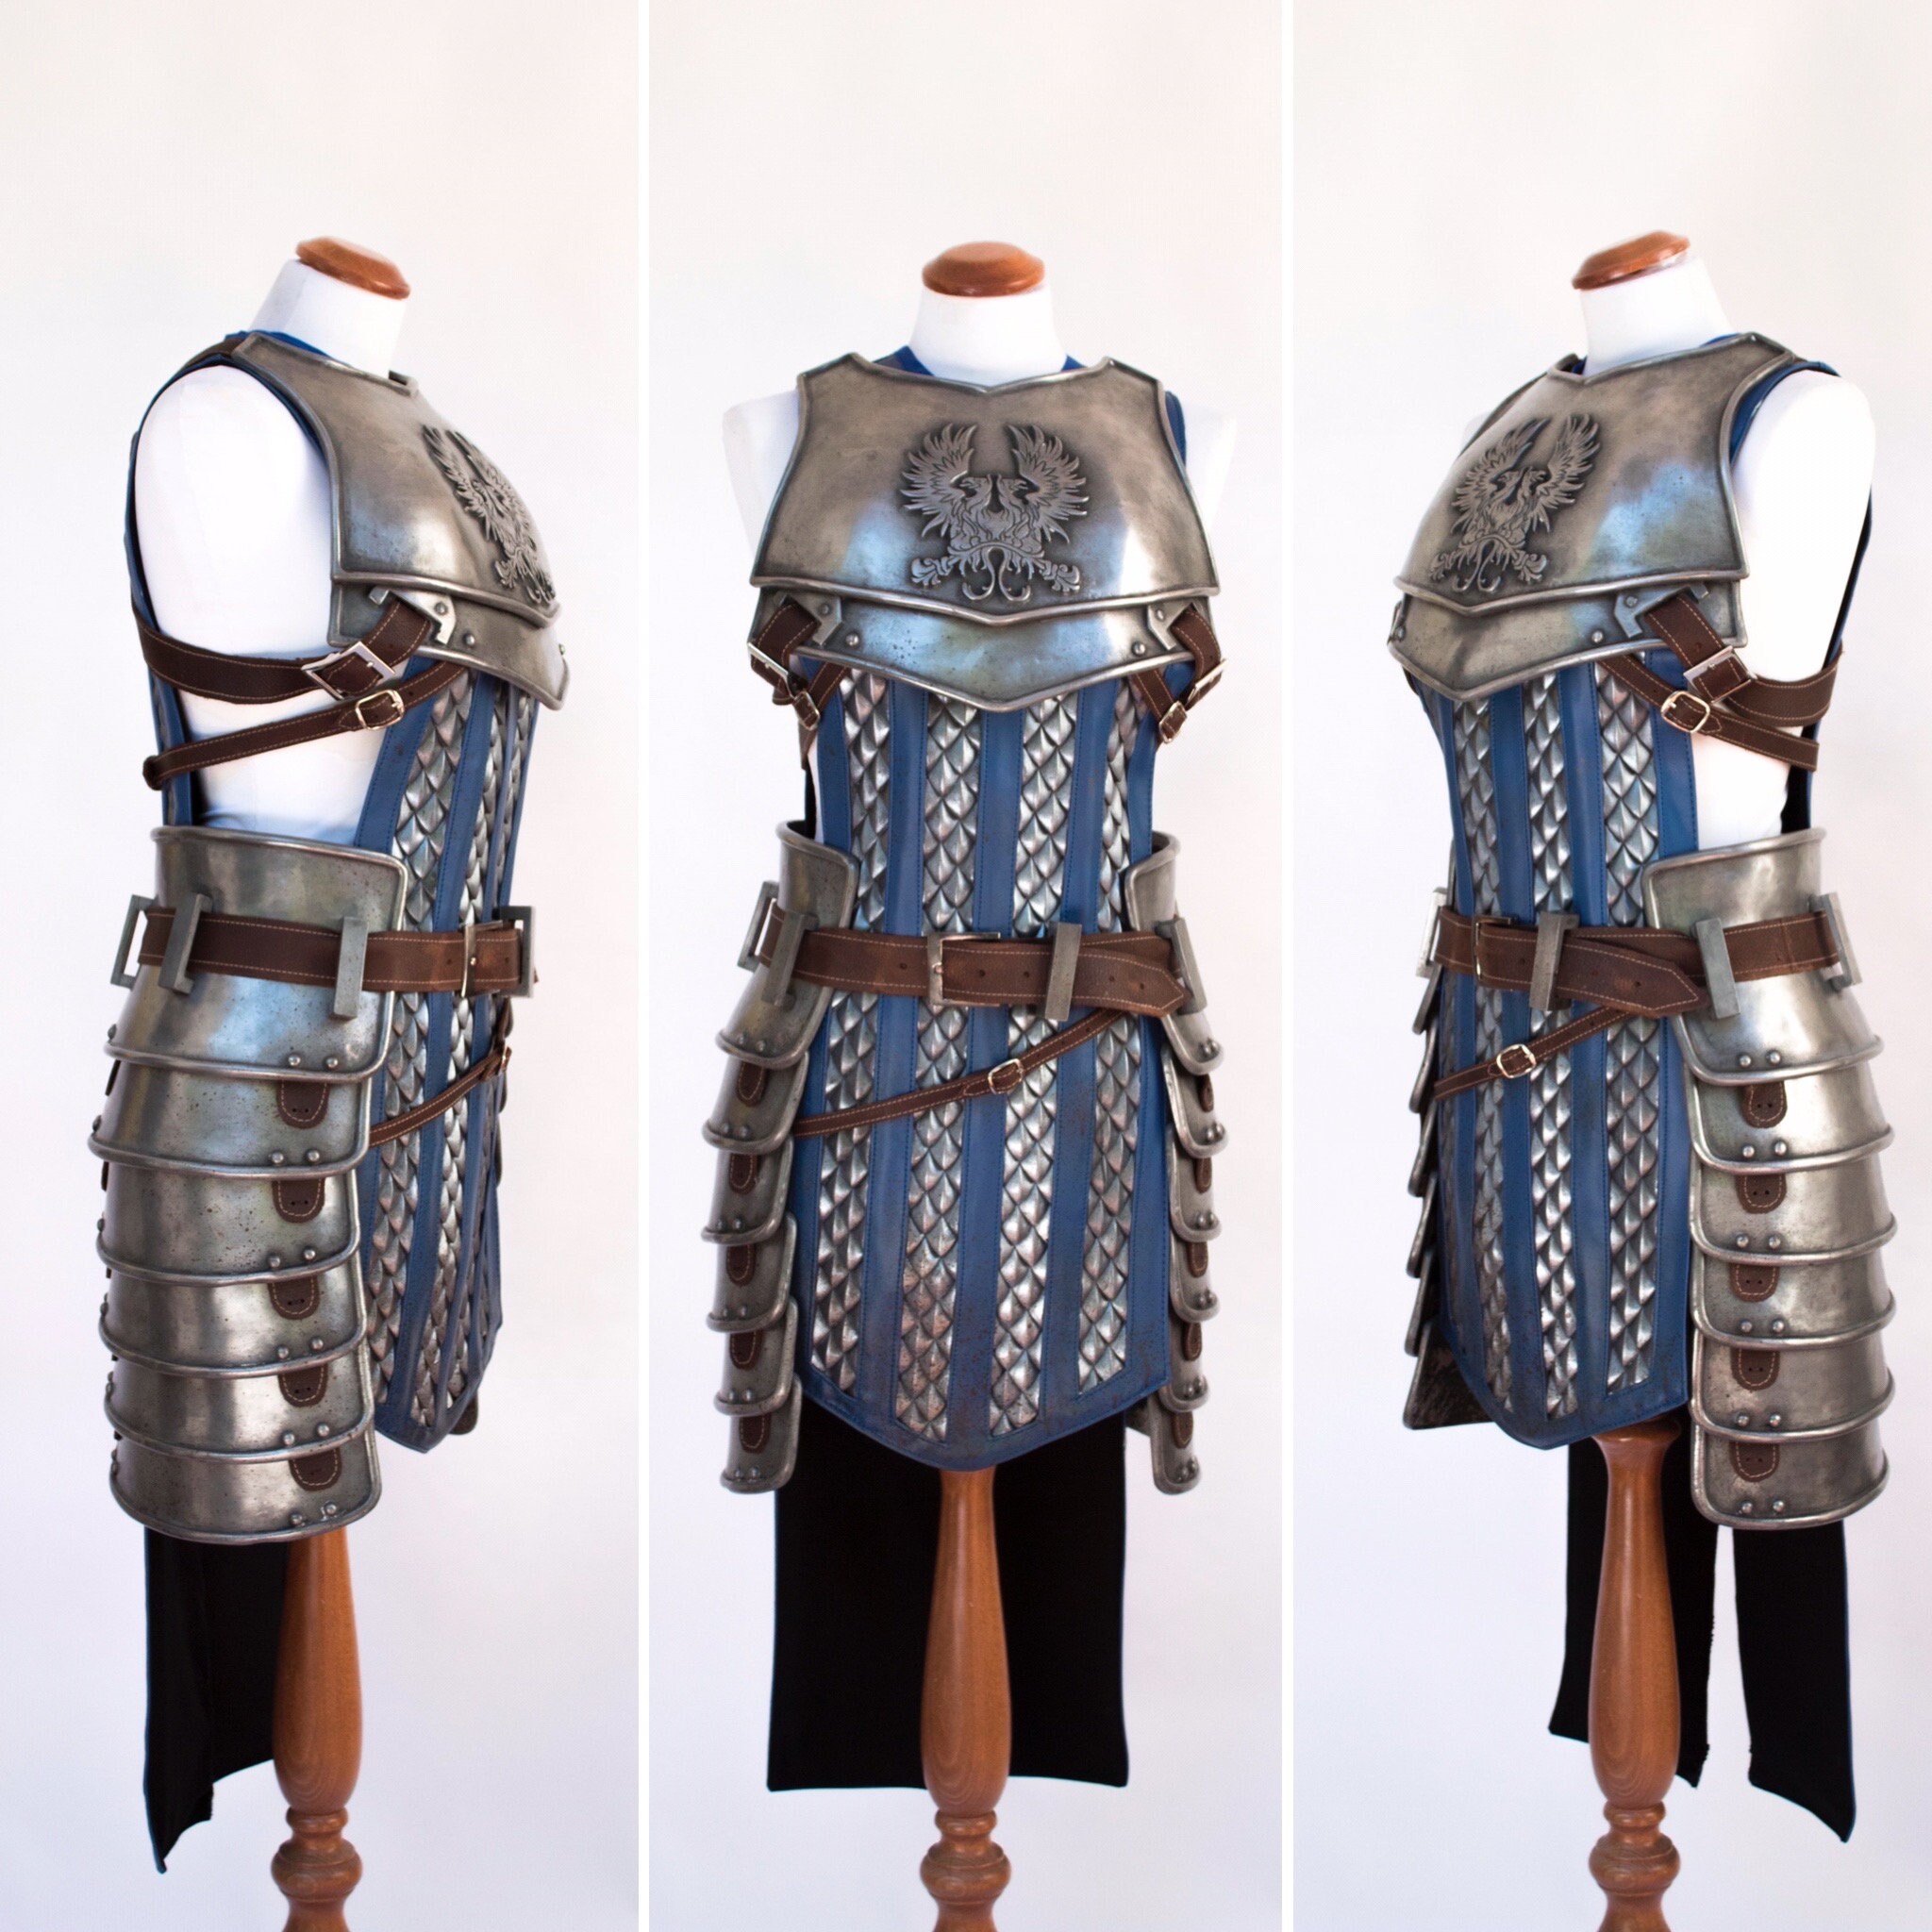 Grey Warden Cosplay Costume Armor Dragon Age Halloween Larp | Etsy